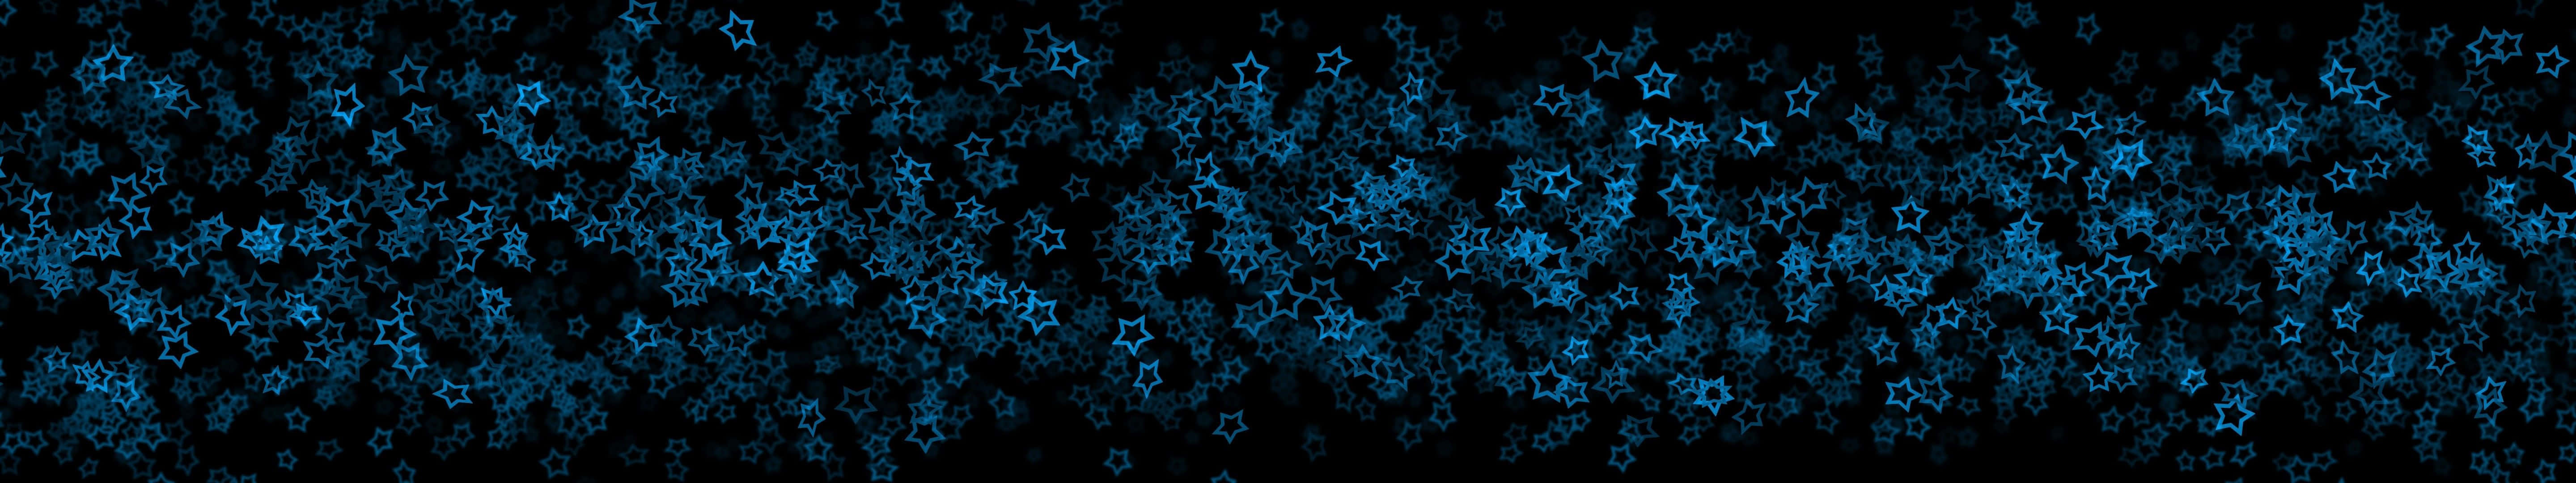 Mehrereblaue Sterne Dunkel Dreifachbildschirm Wallpaper